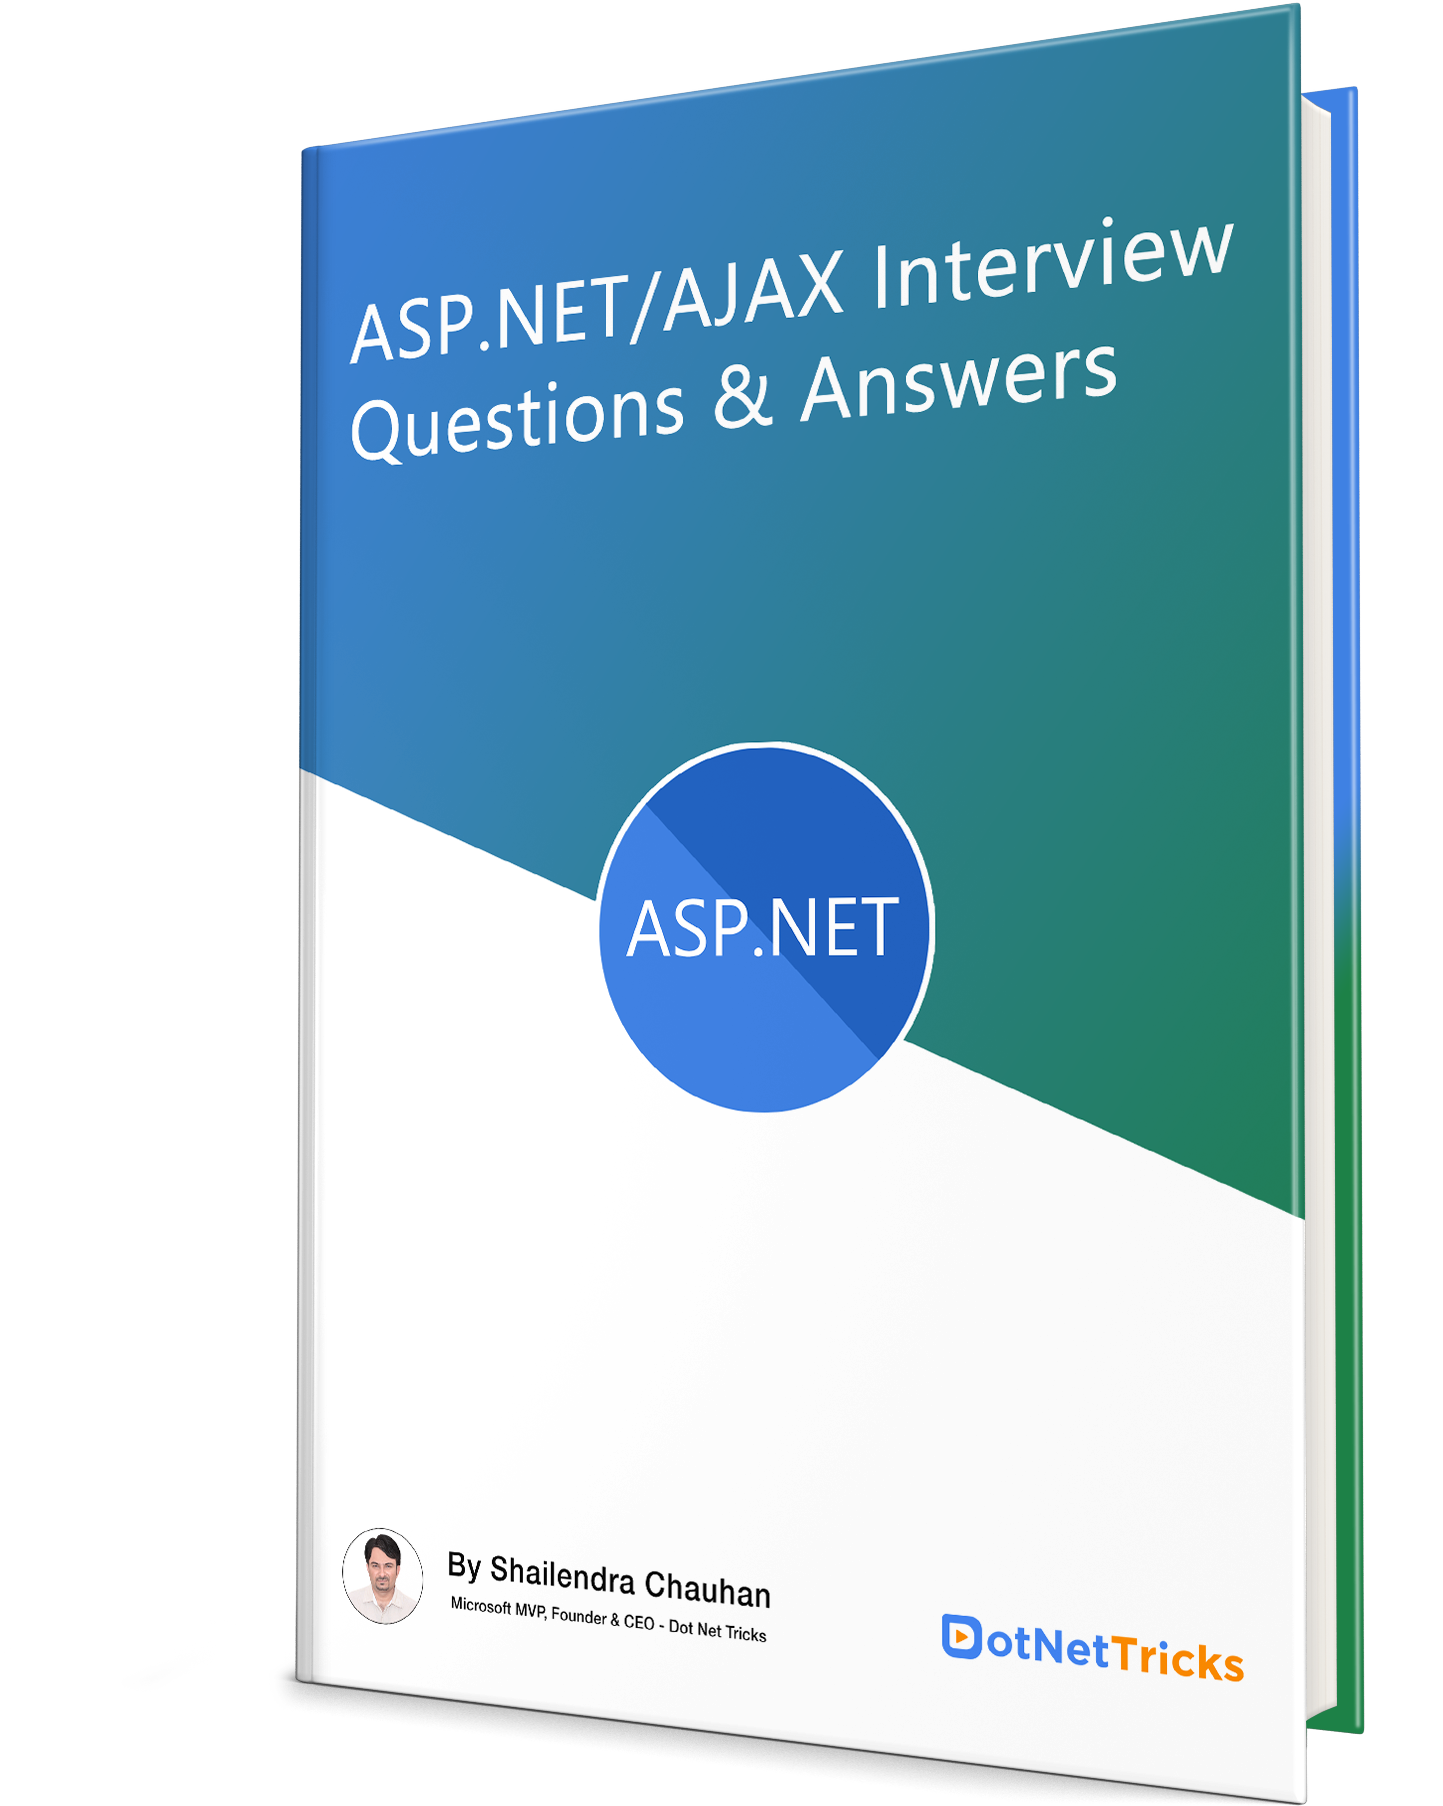 ASP.NET/AJAX Interview Questions & Answers eBook